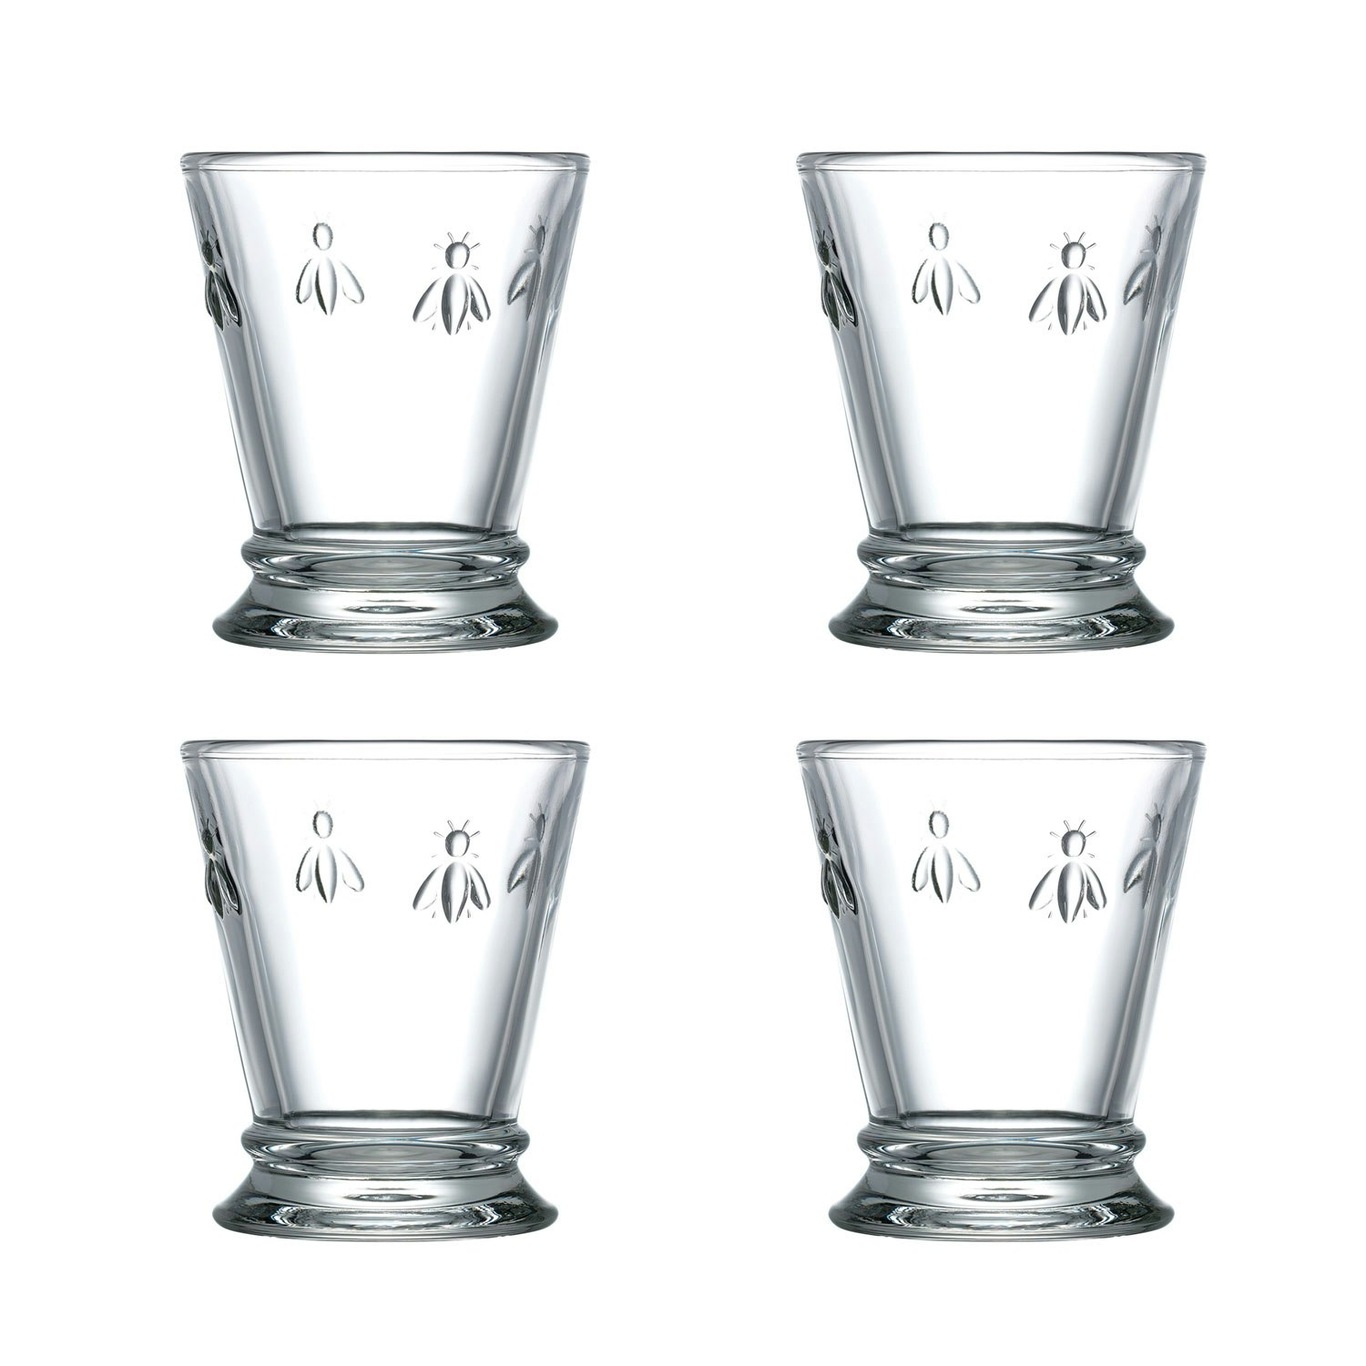 La Rochere Bee Set of 4 Wine Glass - Multi